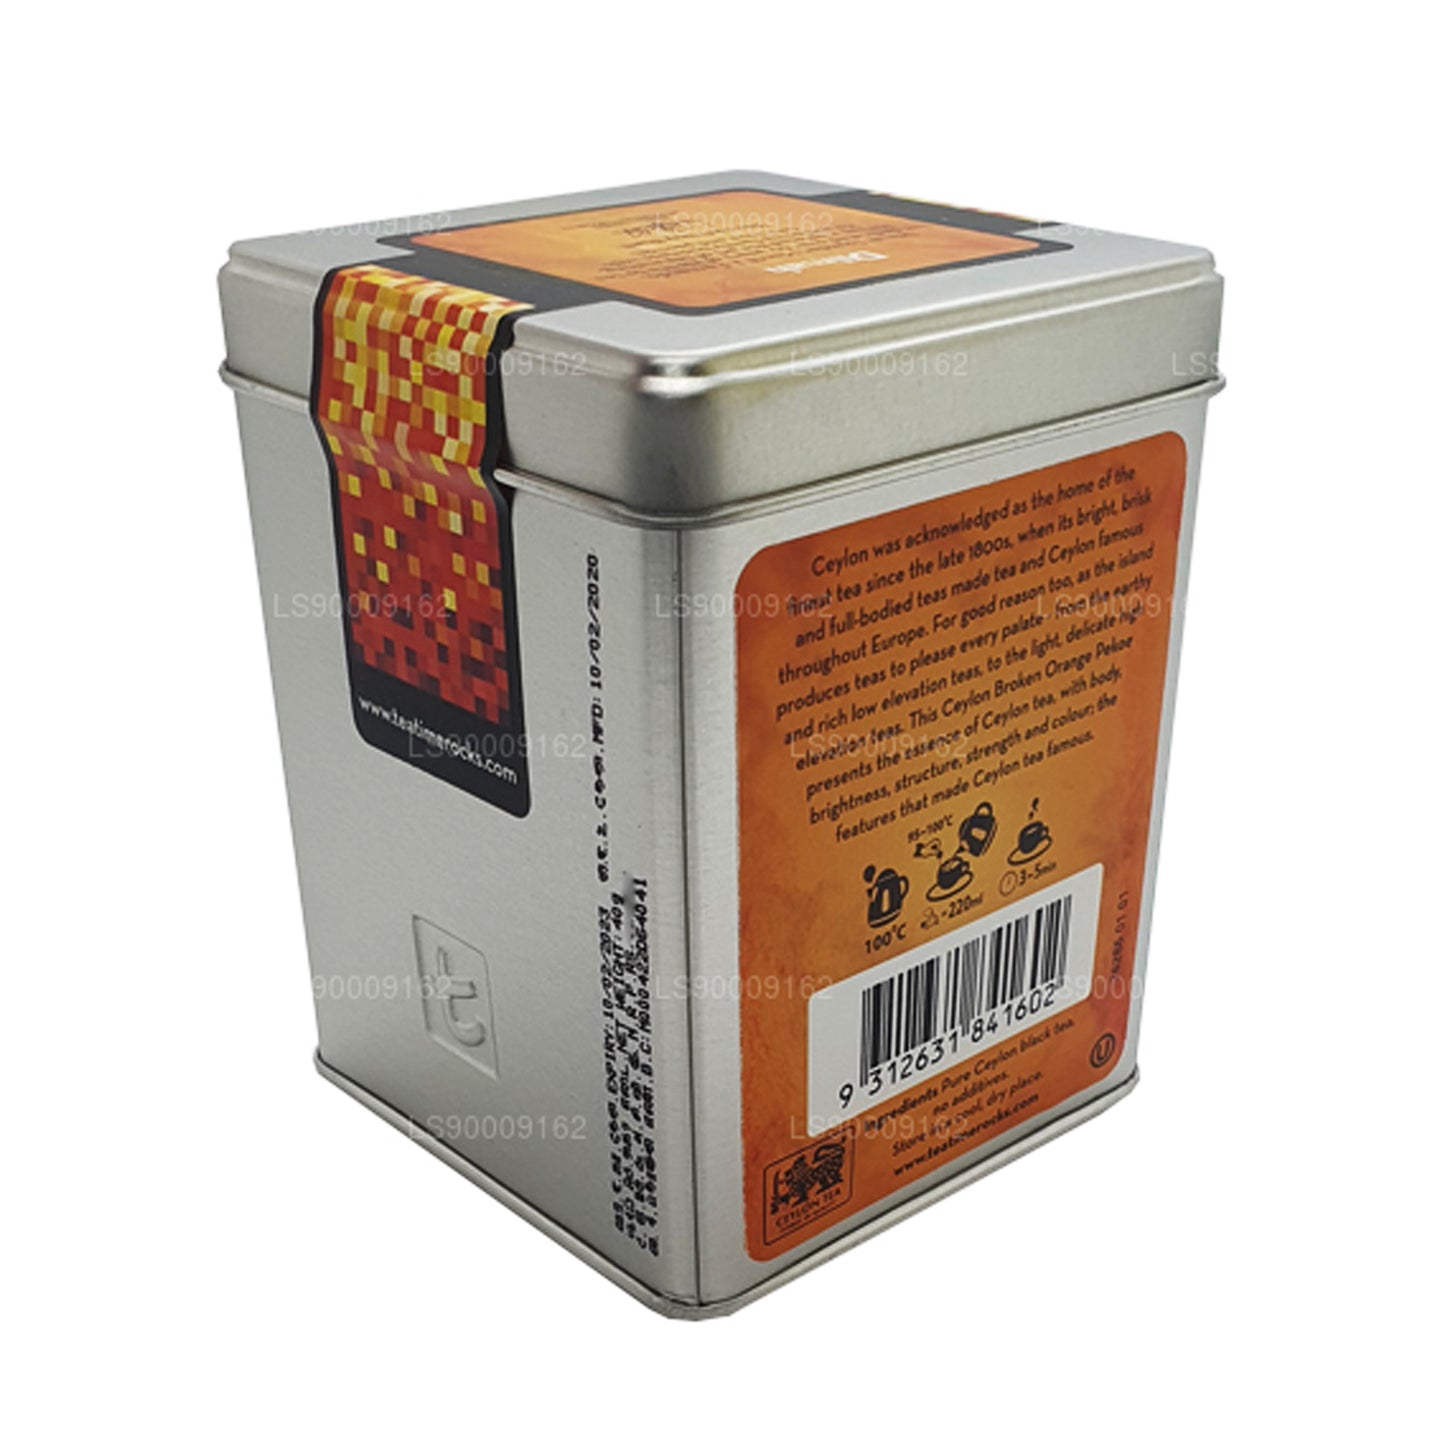 Ceylon Supreme de la serie T de Dilmah (40 g) 20 bolsitas de té